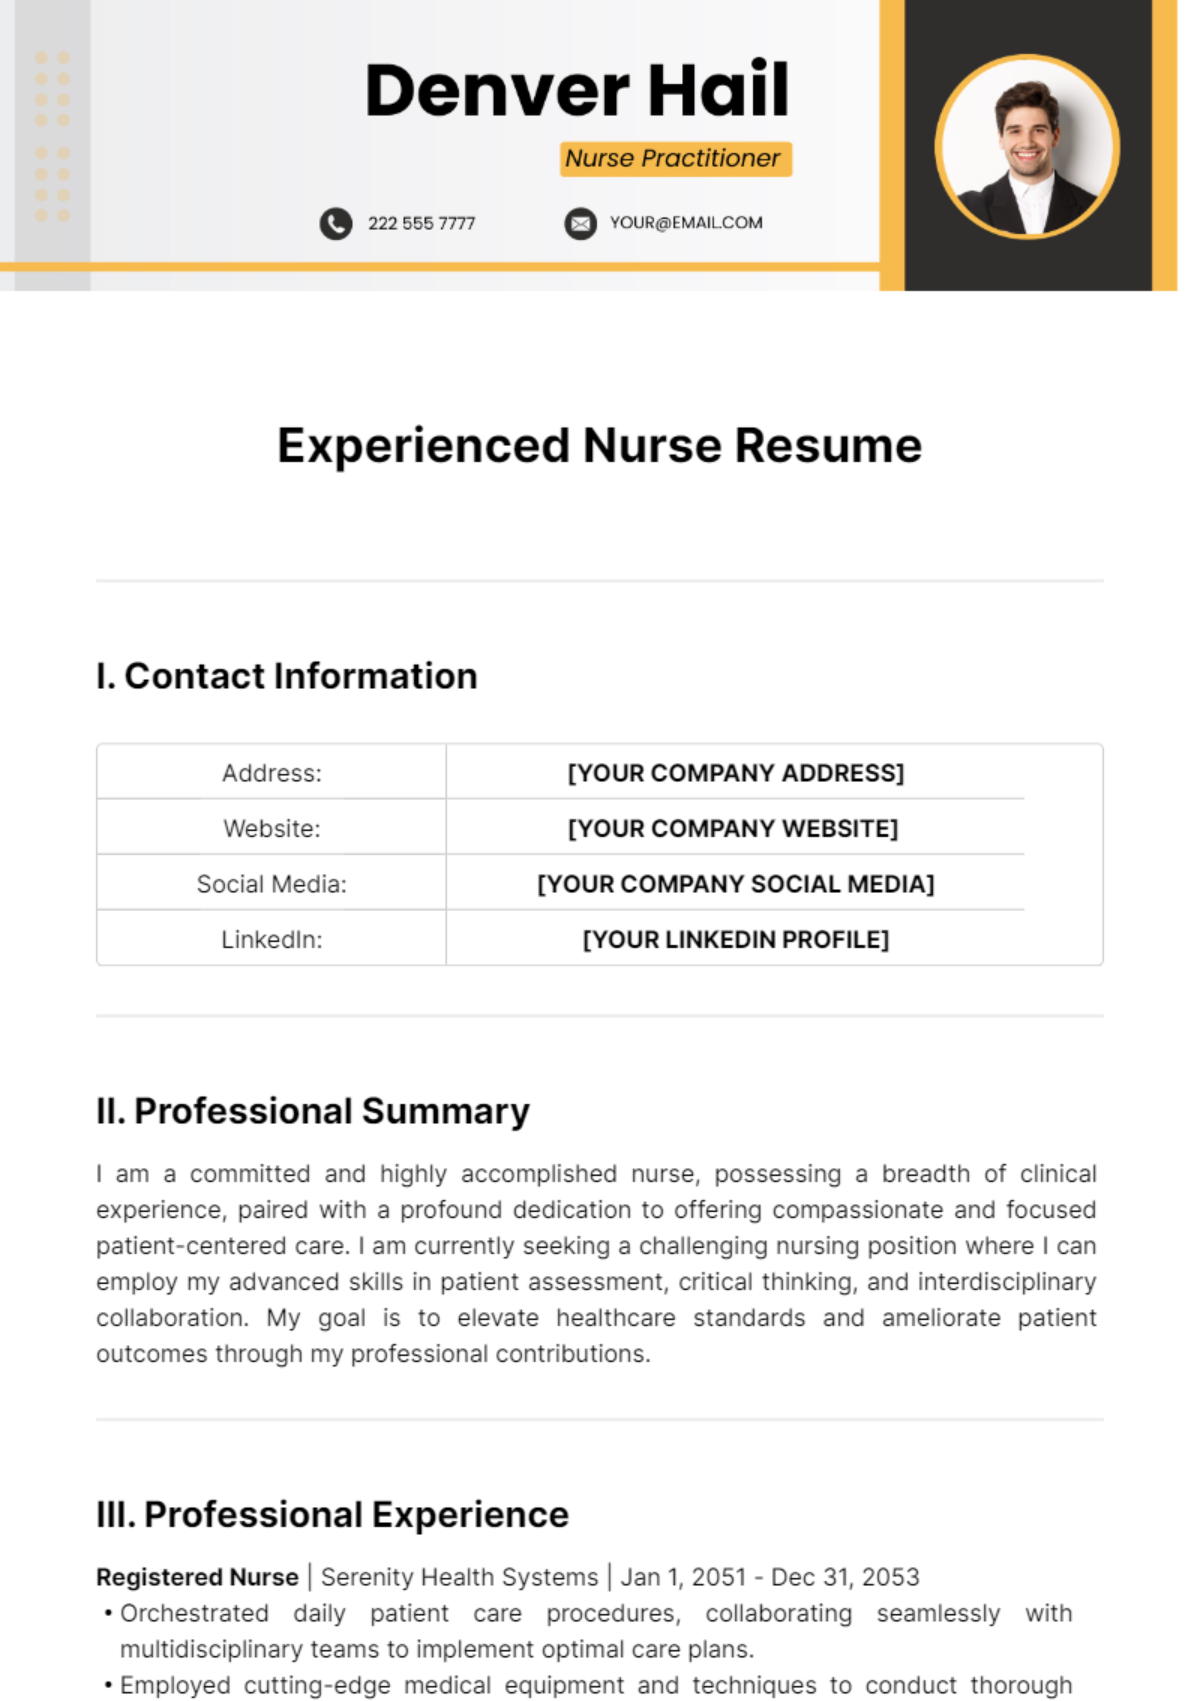 Experienced Nurse Resume Template